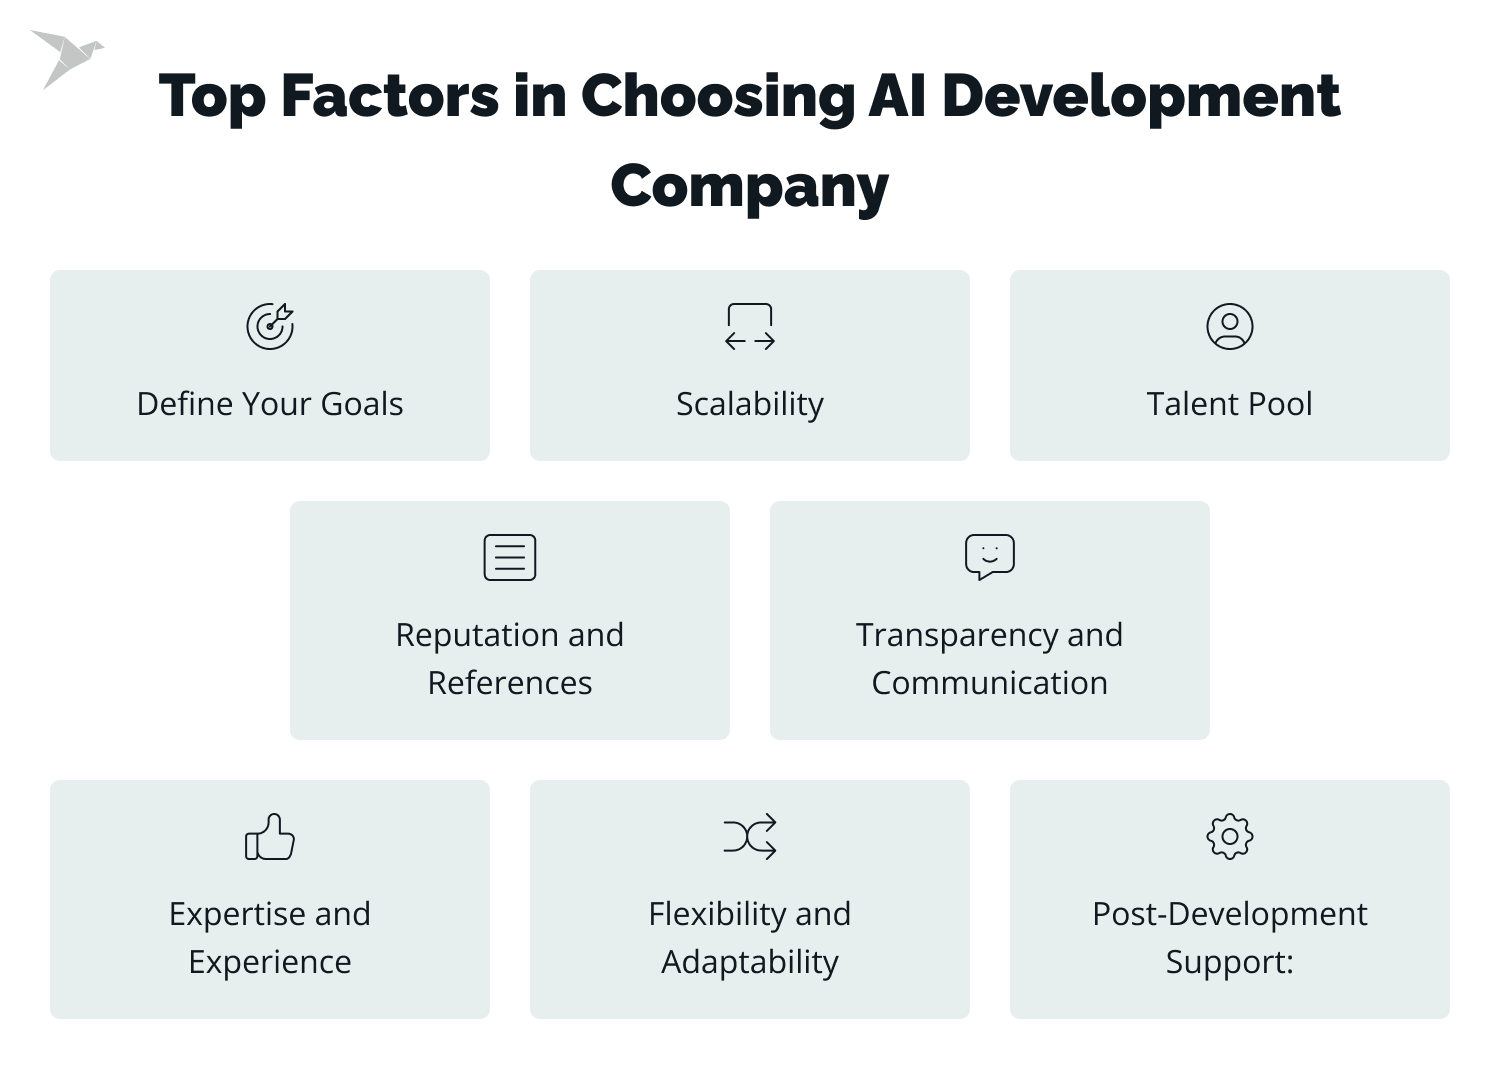 Top factors in choosing AI development company